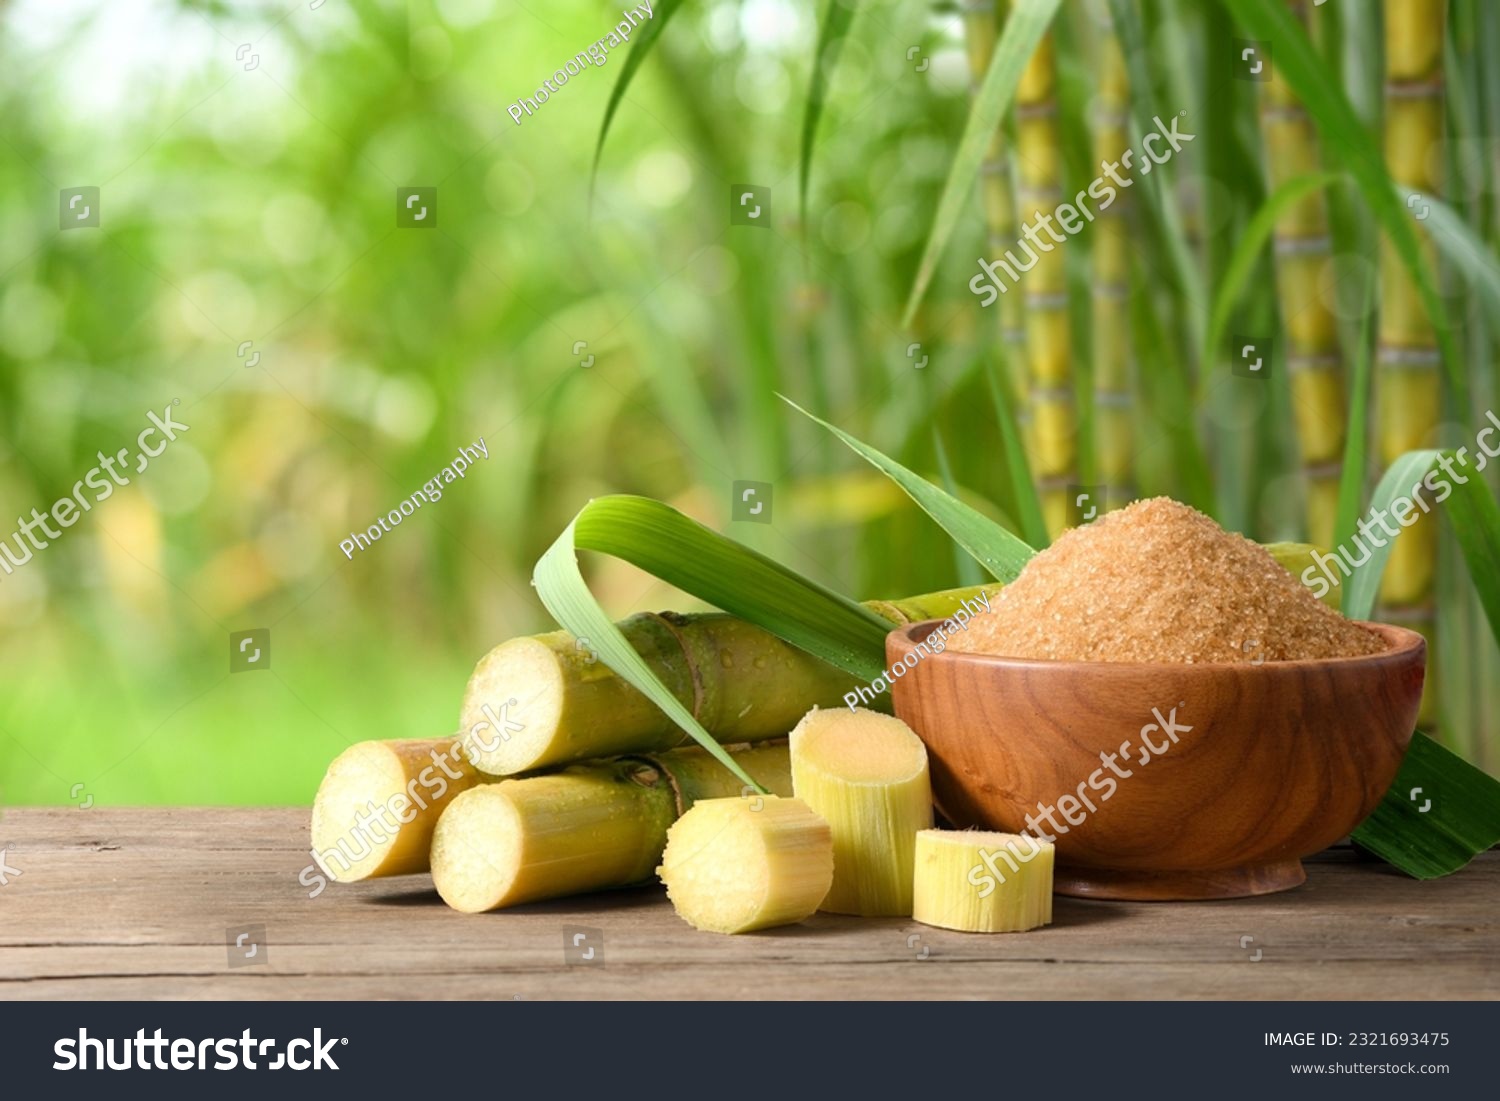 Brown sugar with fresh sugar cane on wooden table with sugar cane plantation farming background. #2321693475